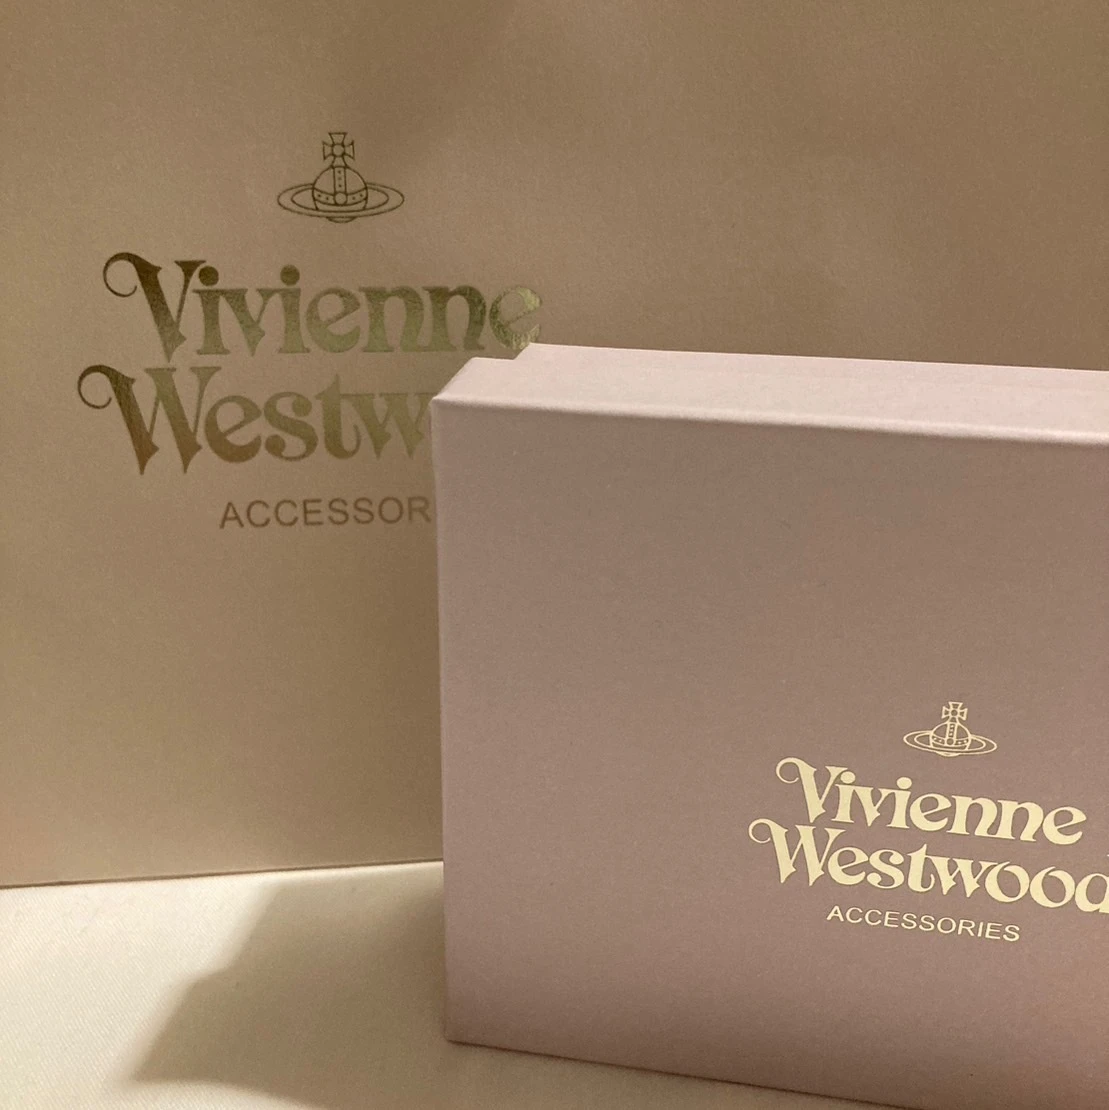 Vivienne Westwoodの薄ピンクの袋と箱の写真。